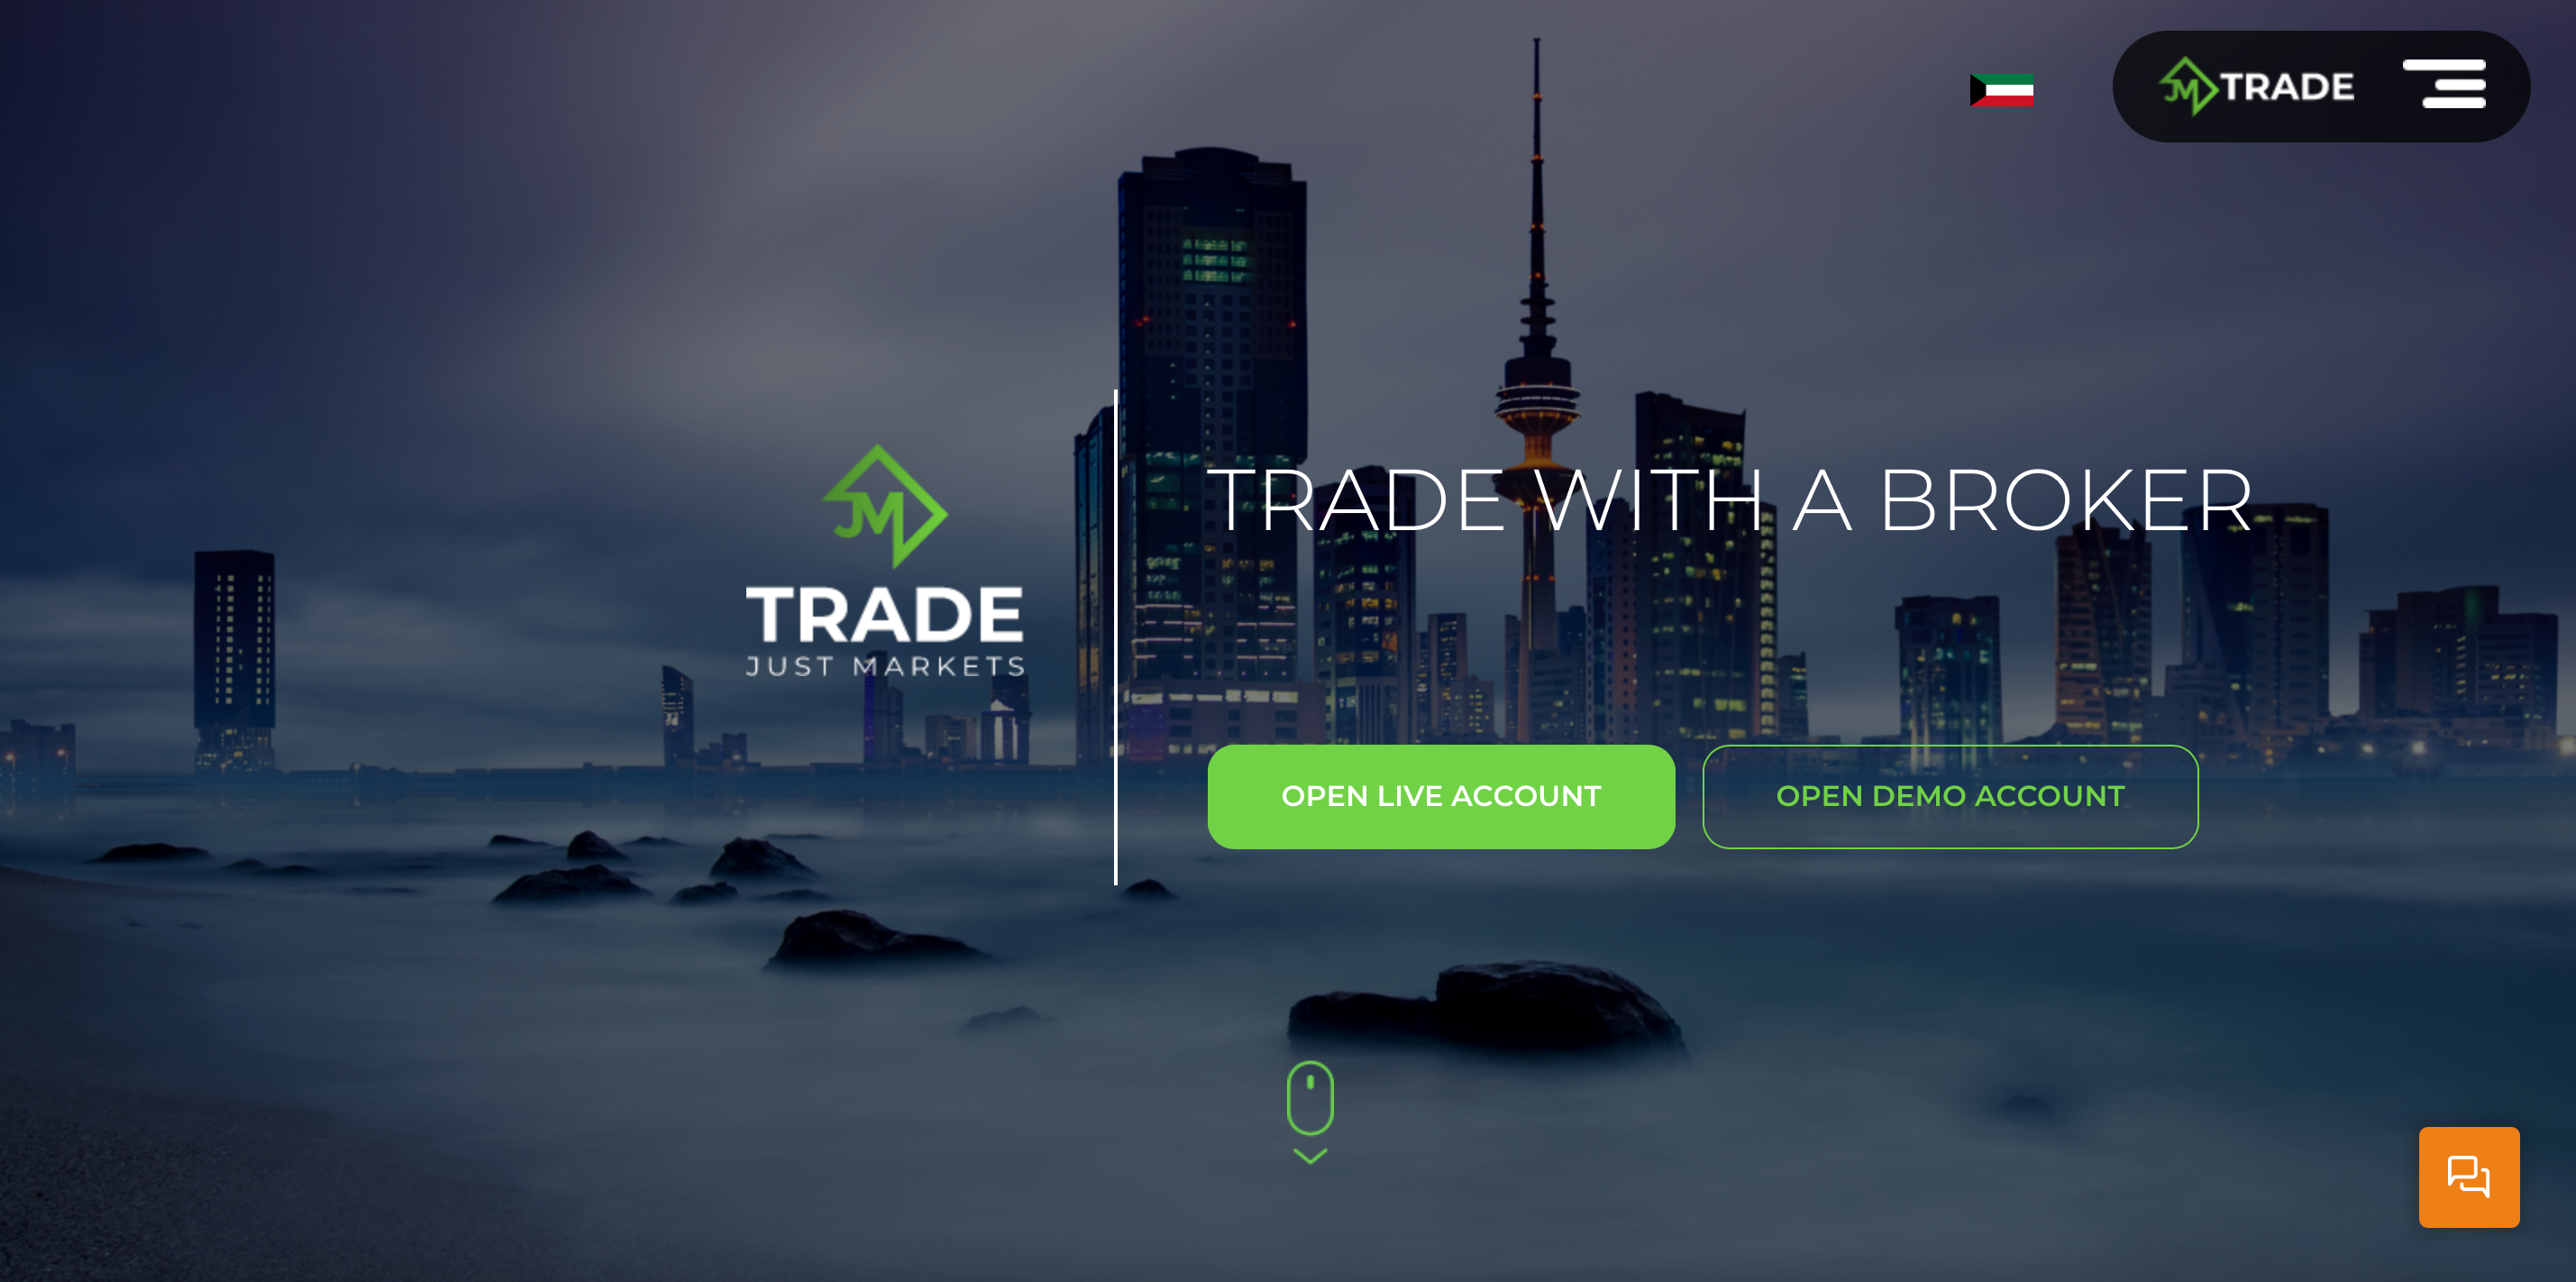 JM Trade website